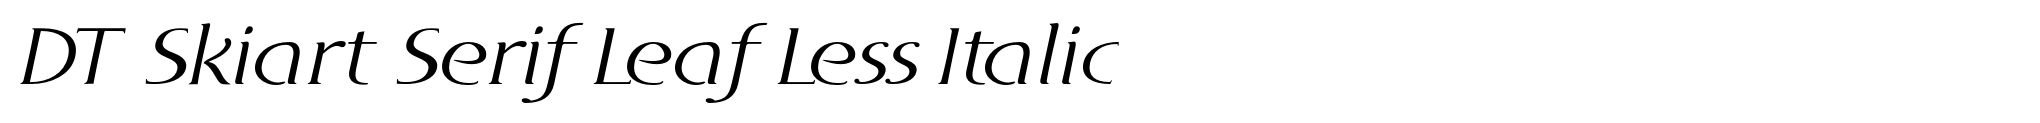 DT Skiart Serif Leaf Less Italic image